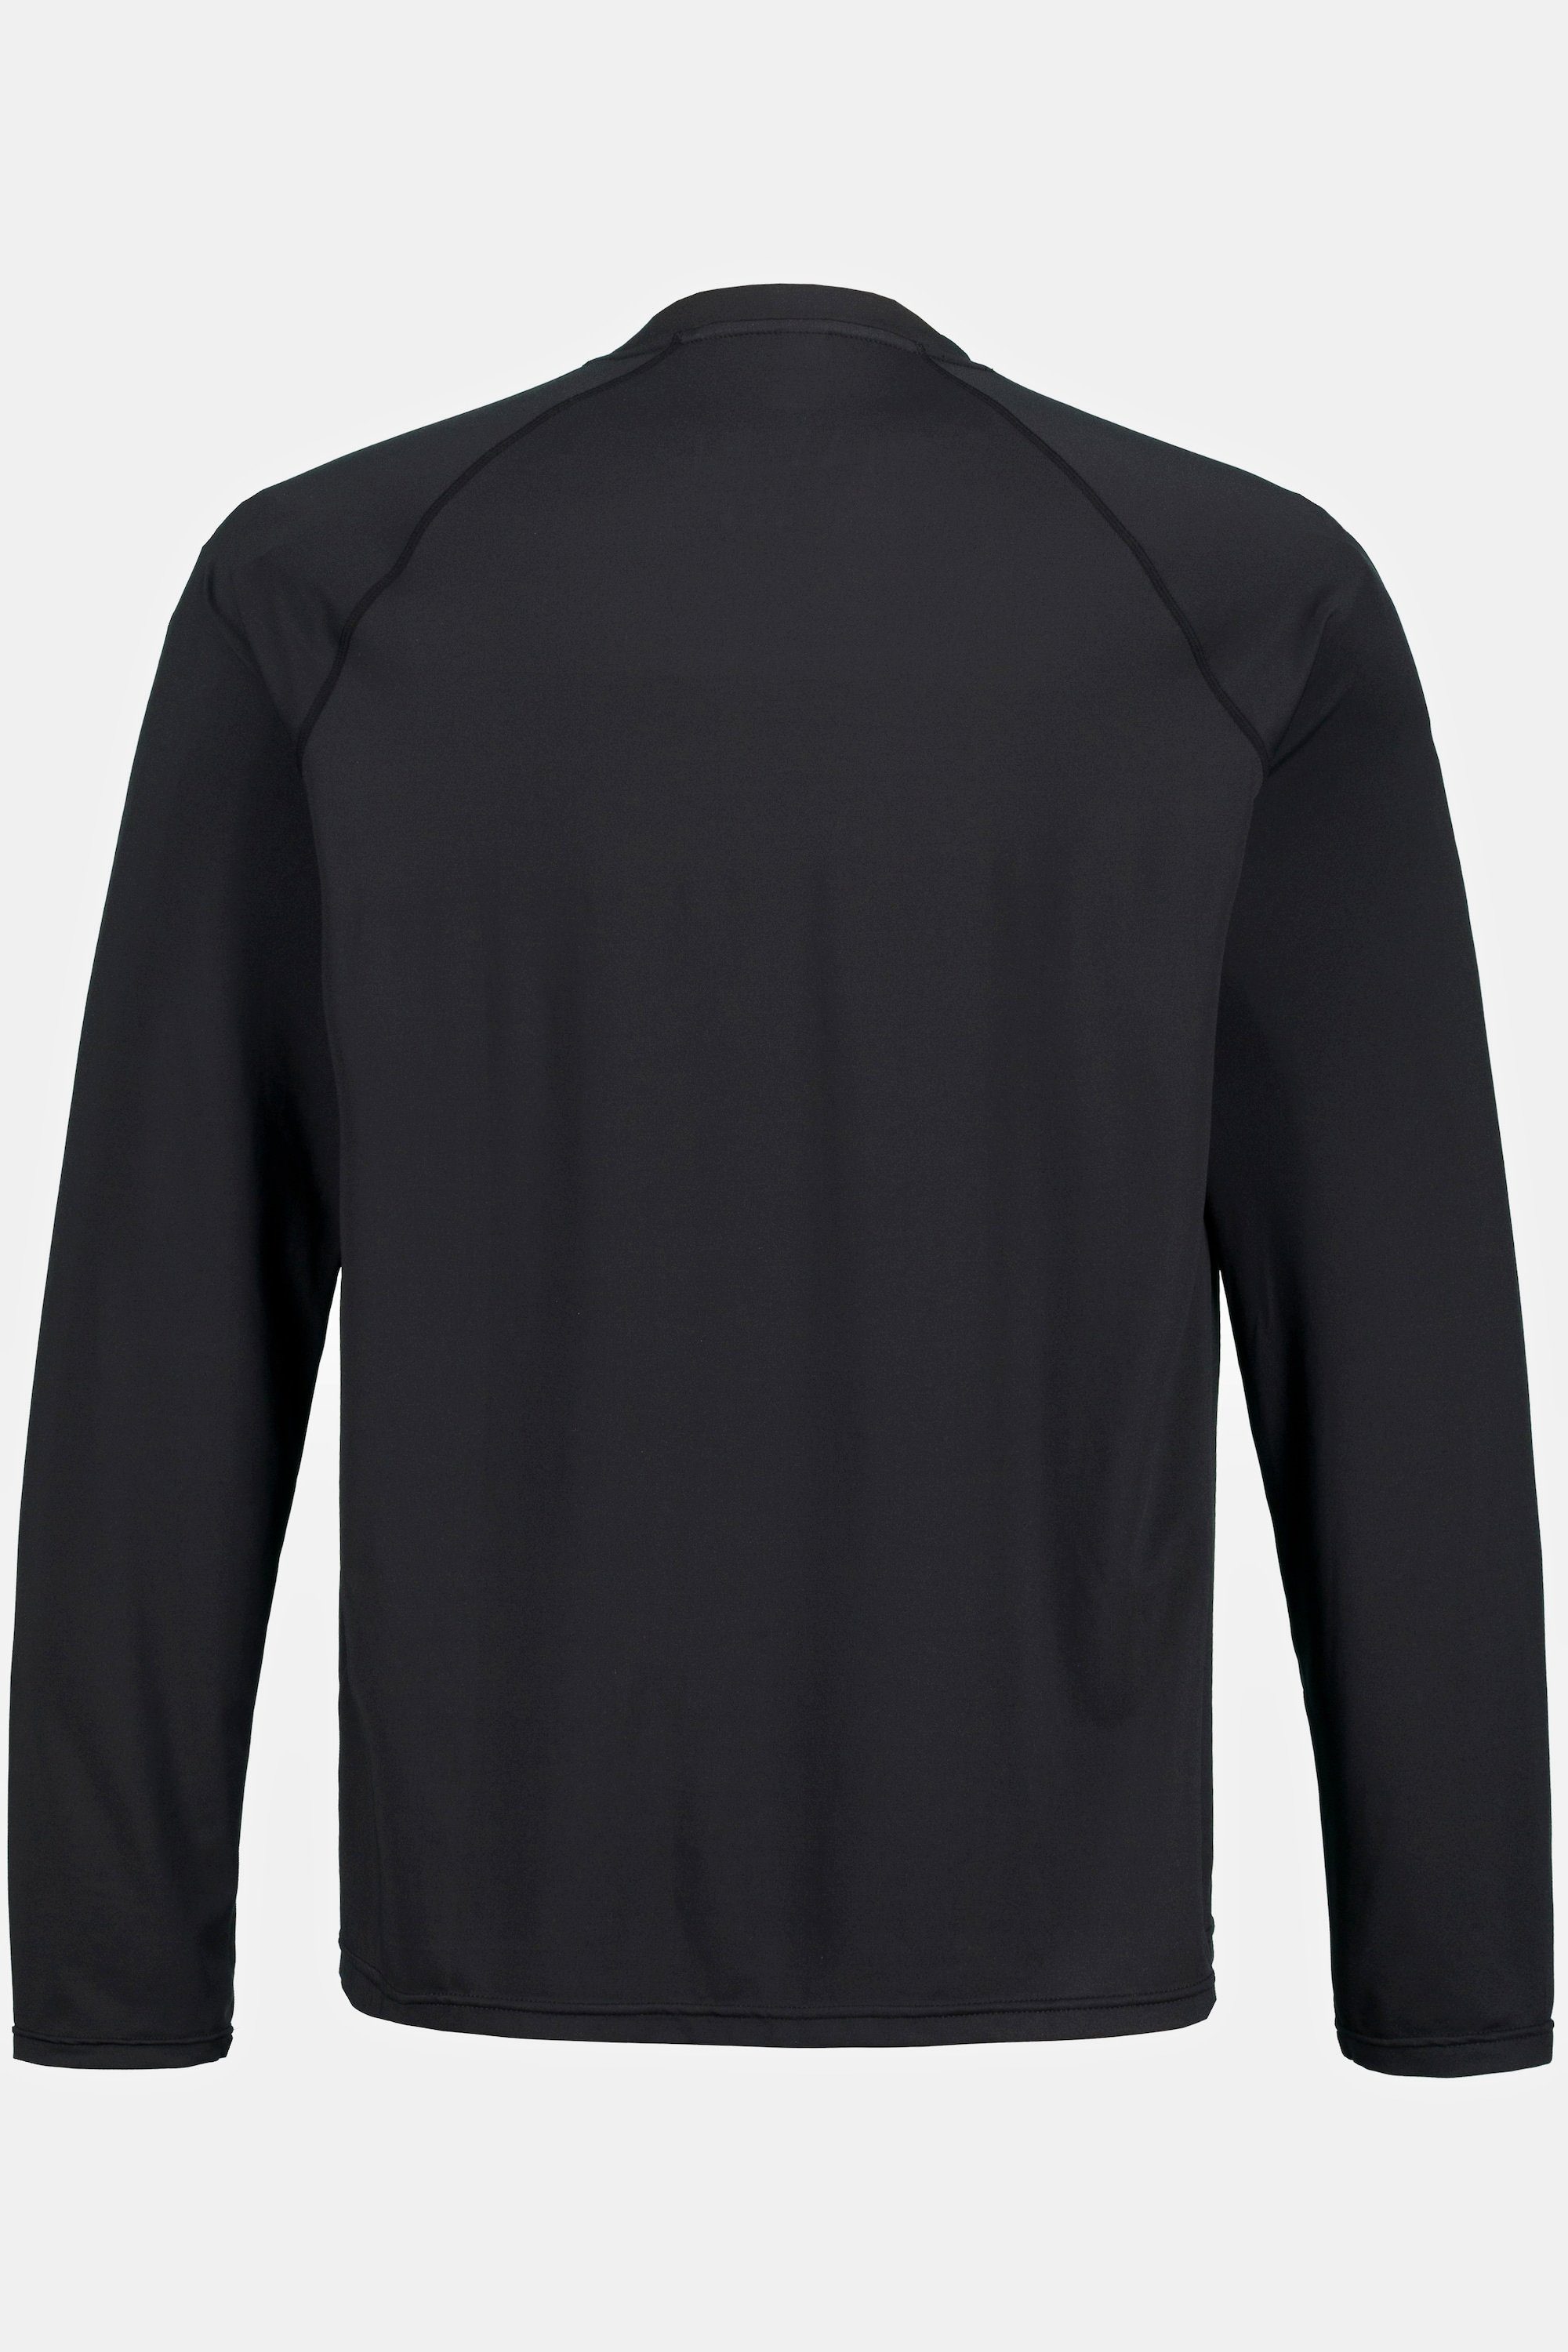 Funktions-Shirt schwarz JP1880 FLEXNAMIC® T-Shirt QuickDry Langarm